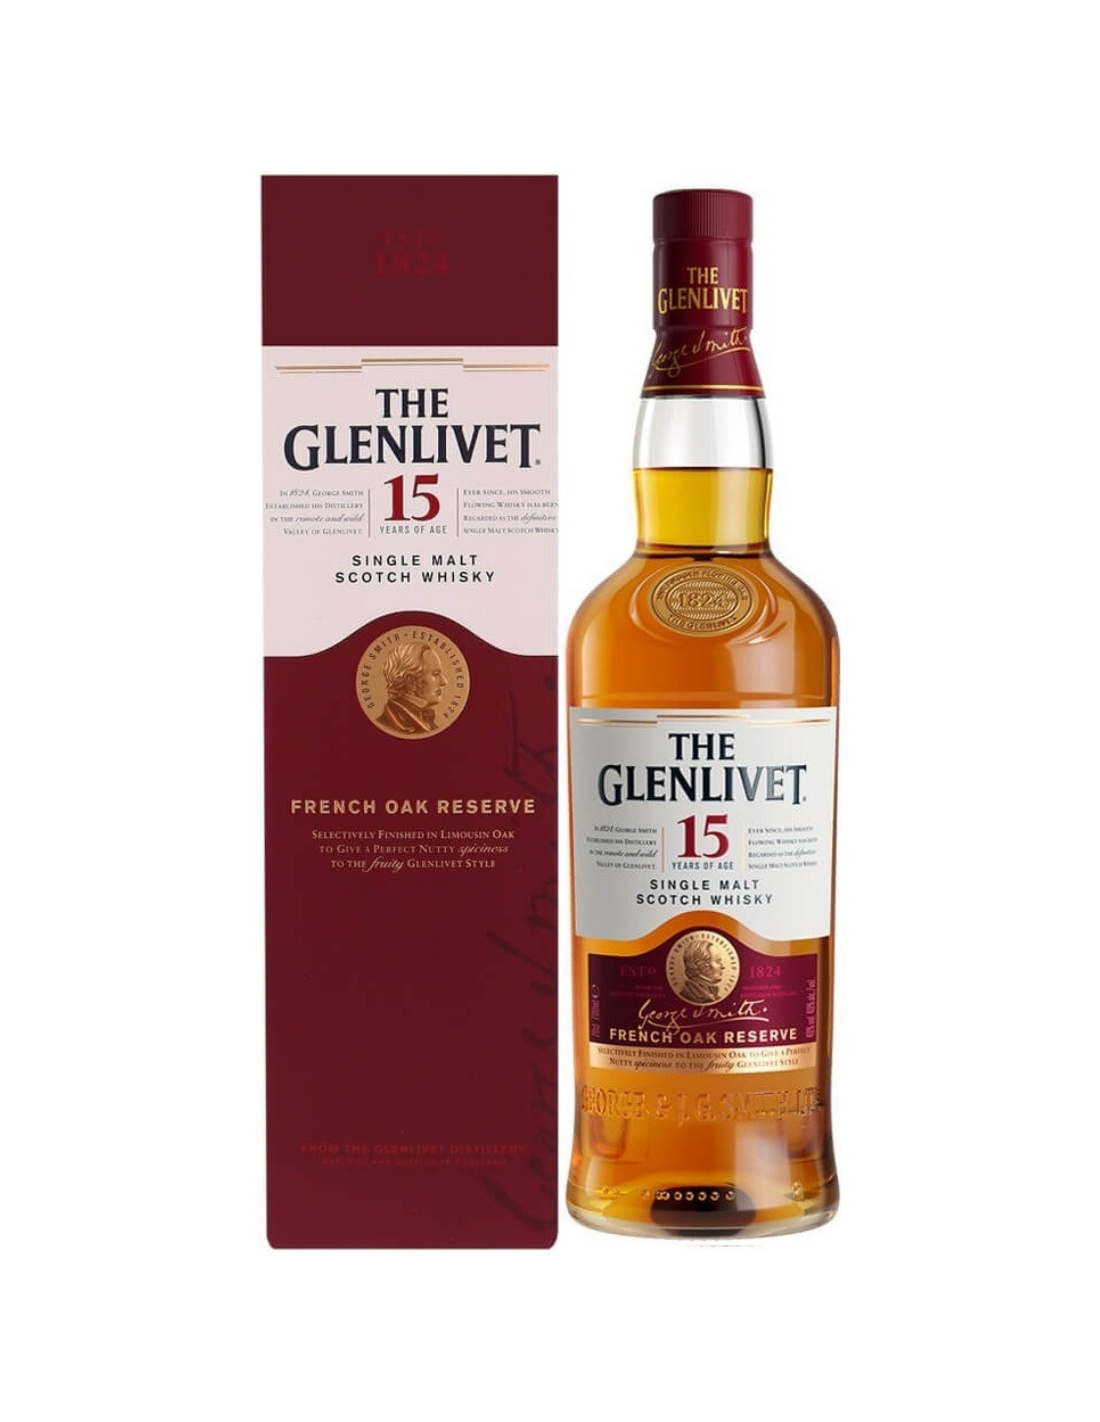 Whisky The Glenlivet, 0.7L, 15 ani, 40% alc., Scotia alcooldiscount.ro